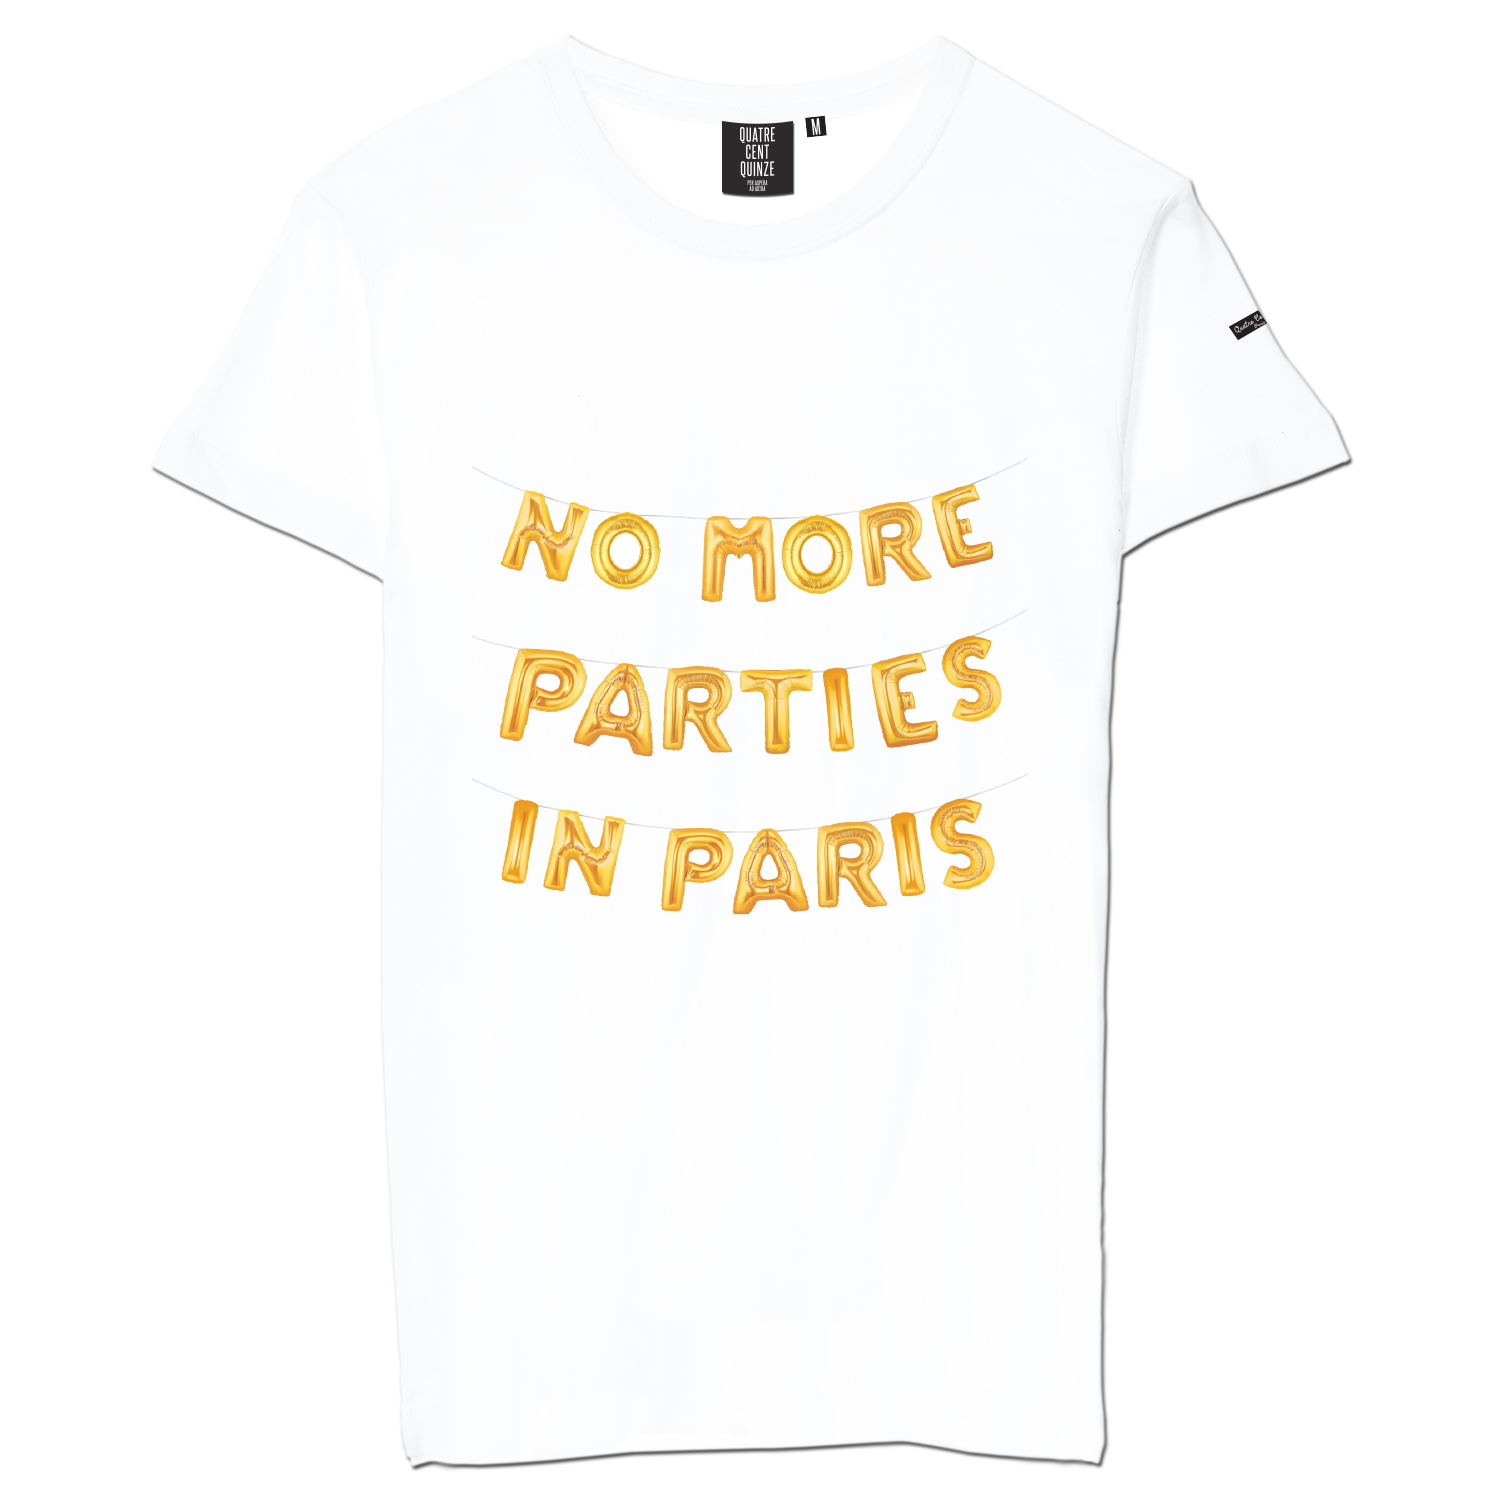 No more parties